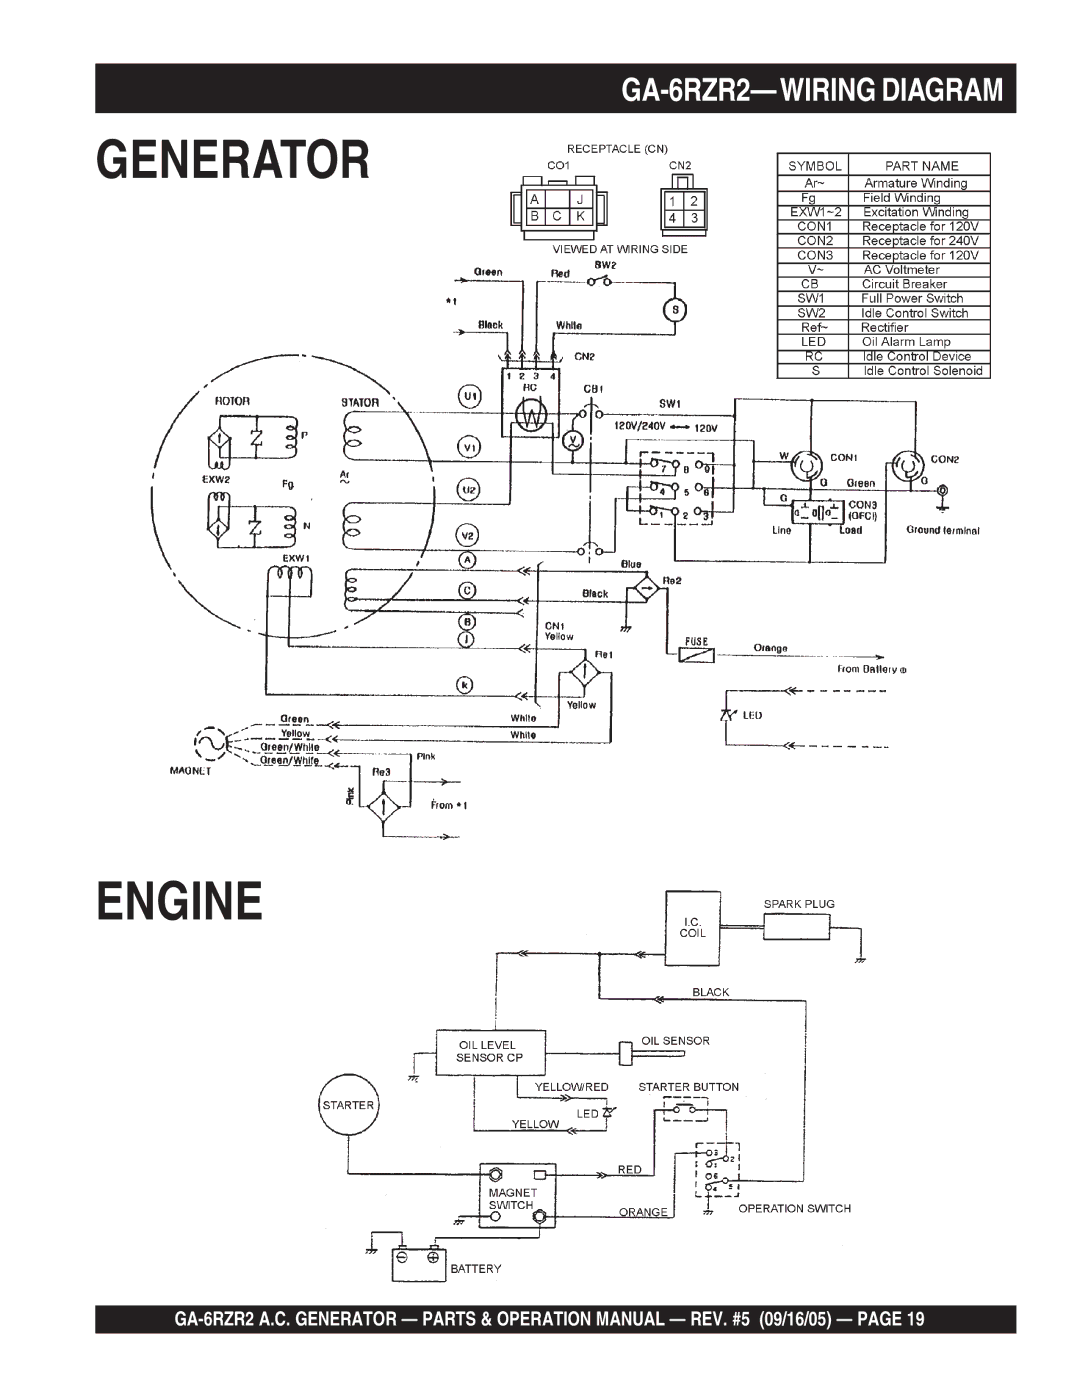 Multiquip operation manual Generator Engine, GA-6RZR2-WIRING Diagram 